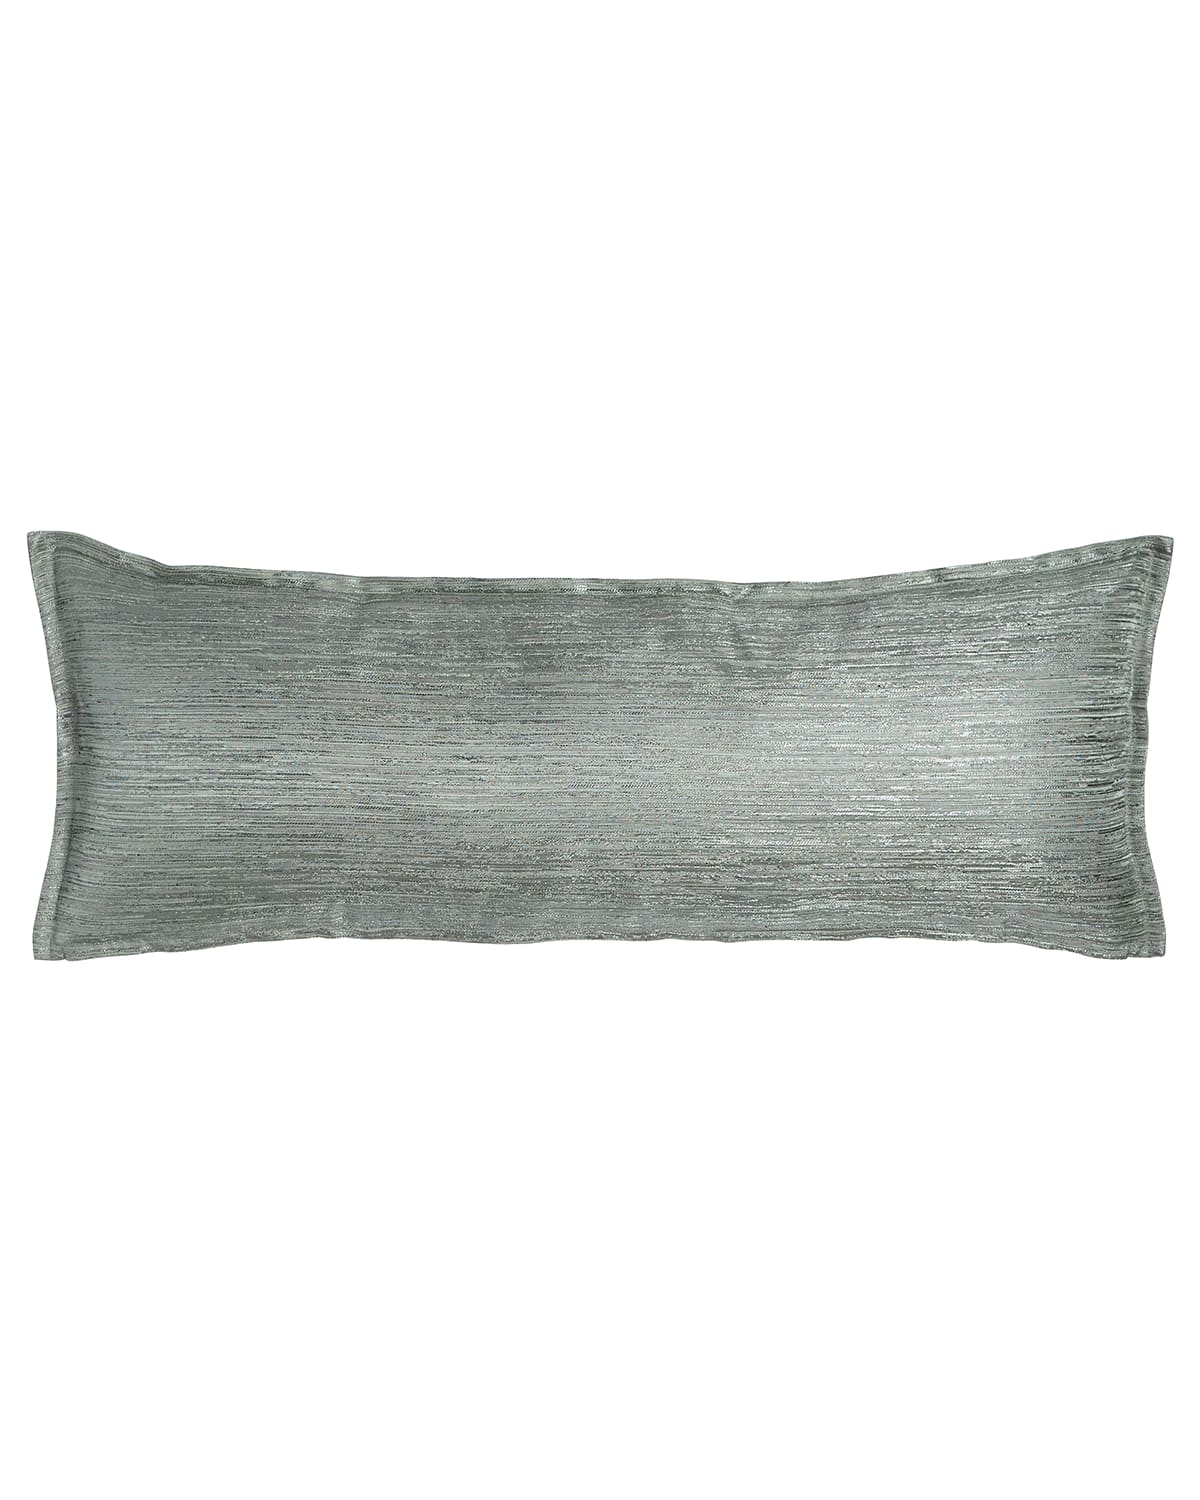 Image Fino Lino Linen & Lace Woodmere Pillow, 12" x 32"